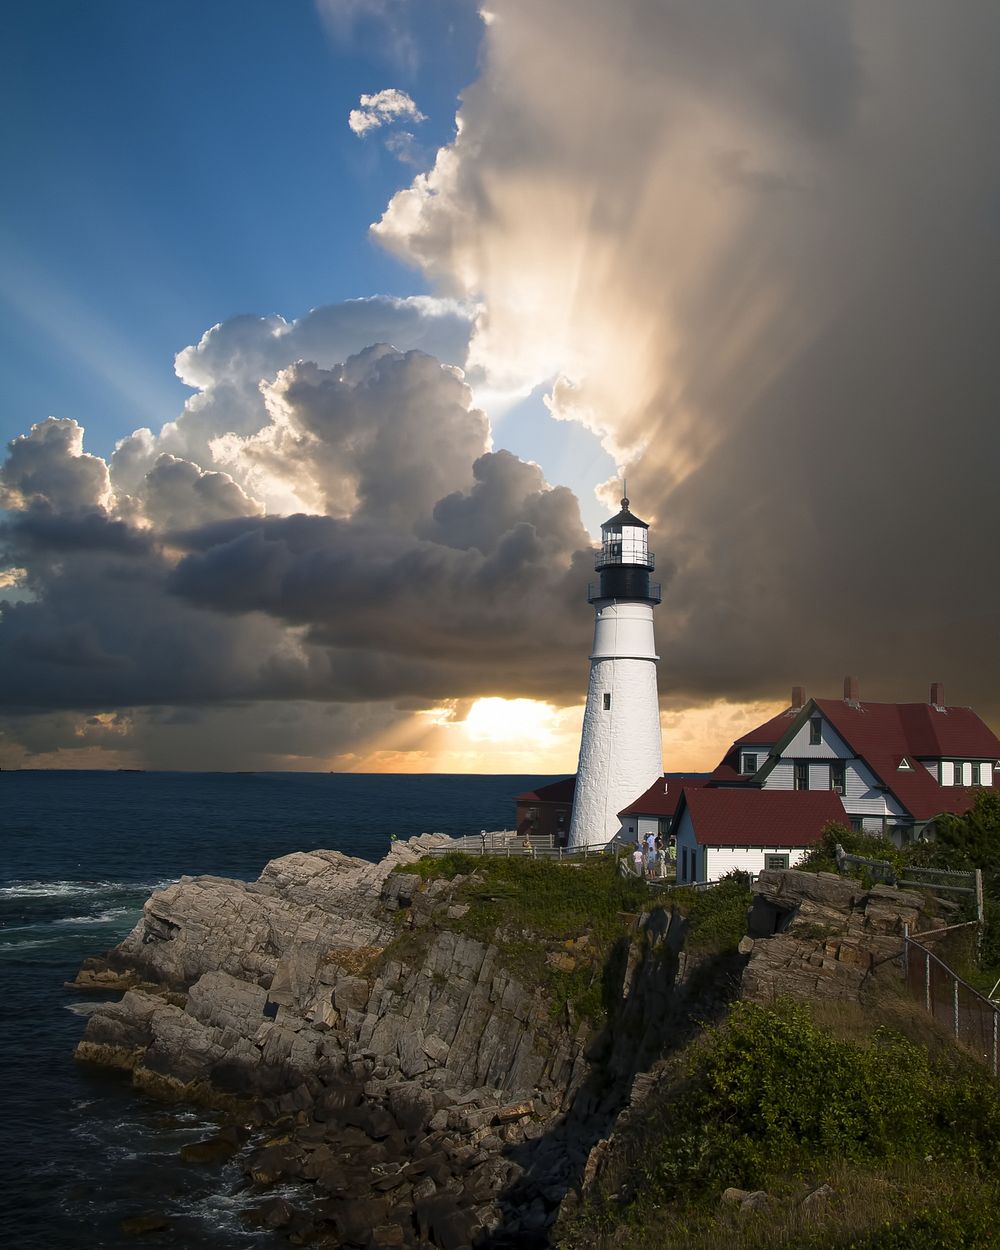 Lighthouse, sunrise landscape. View public domain image source here